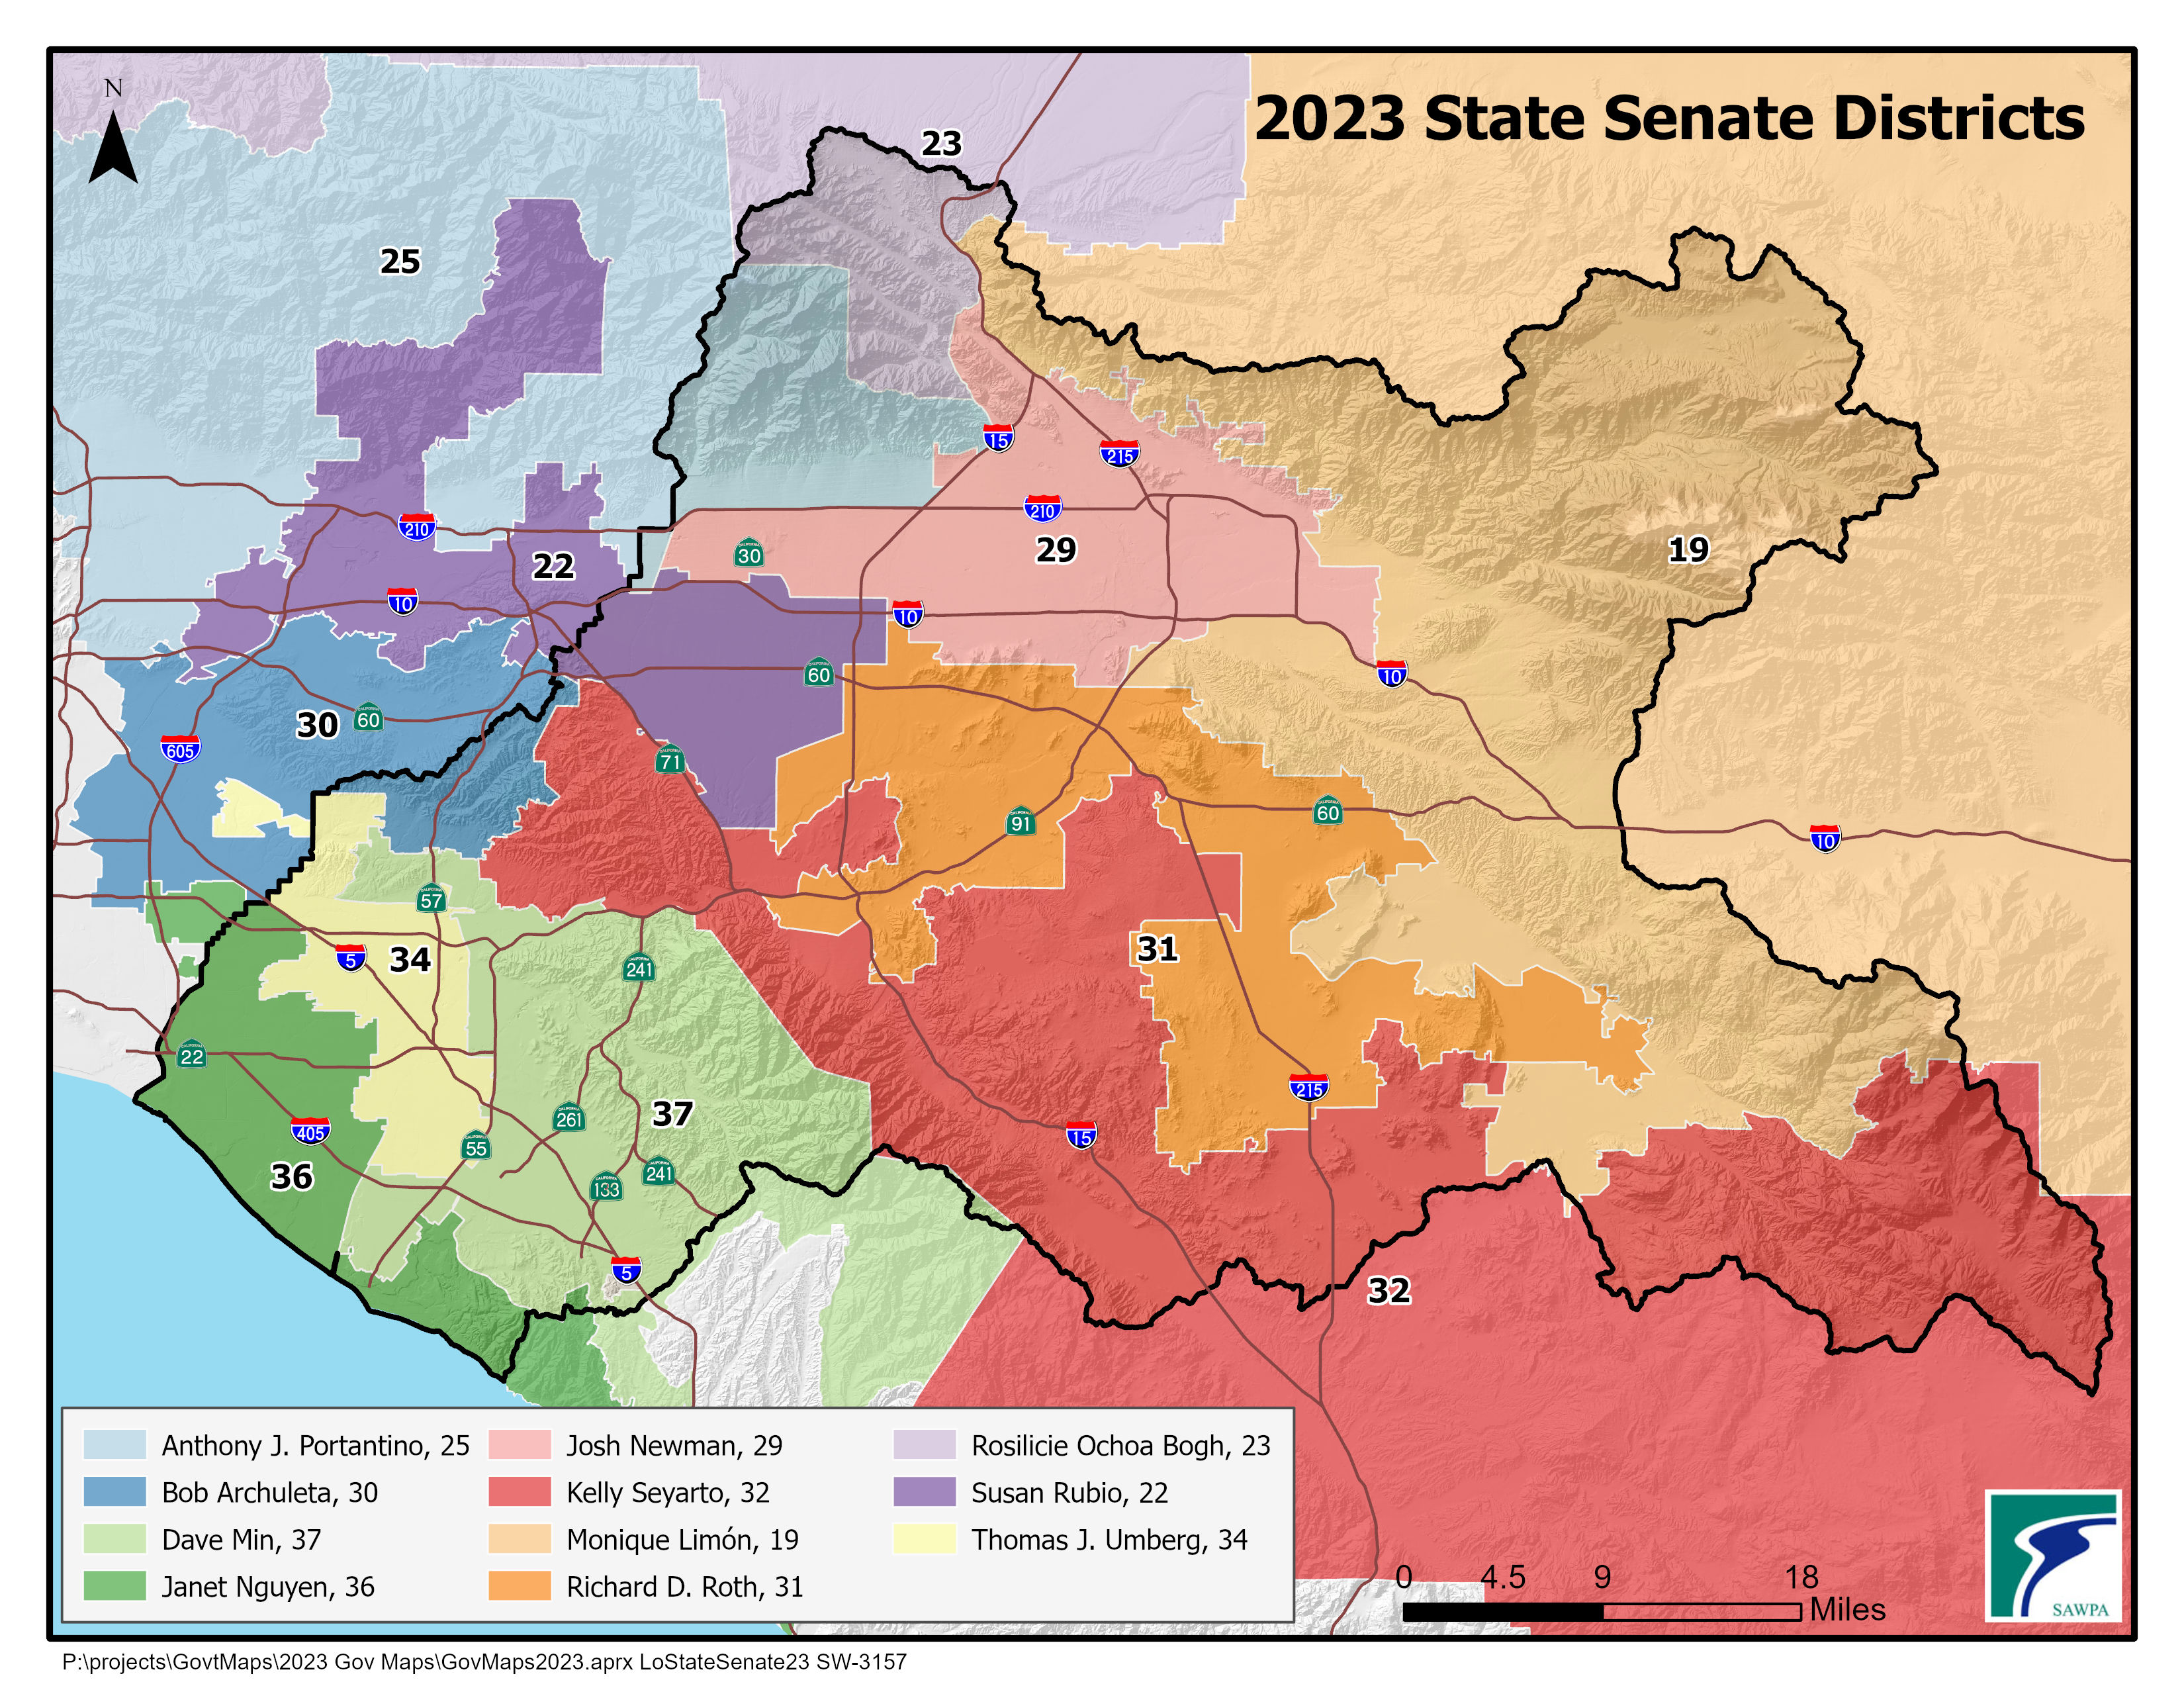 GIS map of California Senate